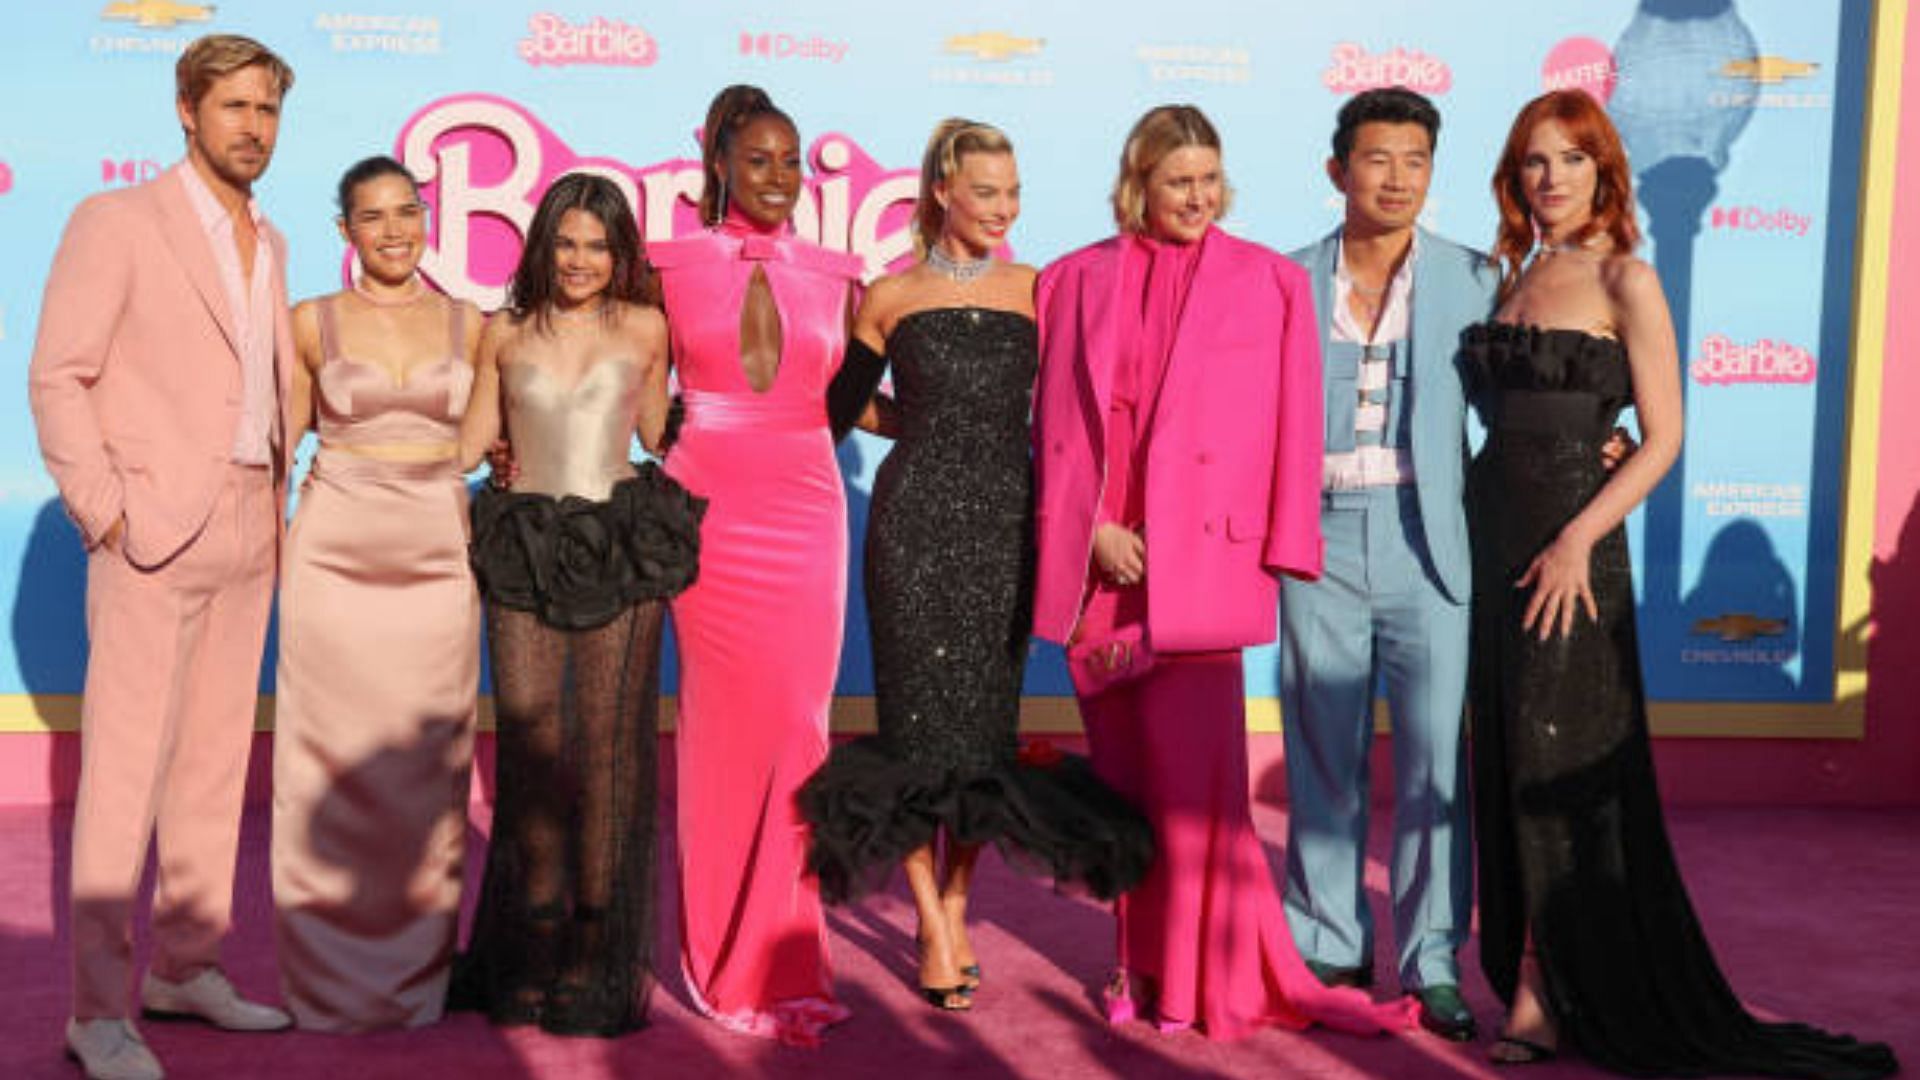 Barbie movie premiere: 5 best-dressed actors & what they wore